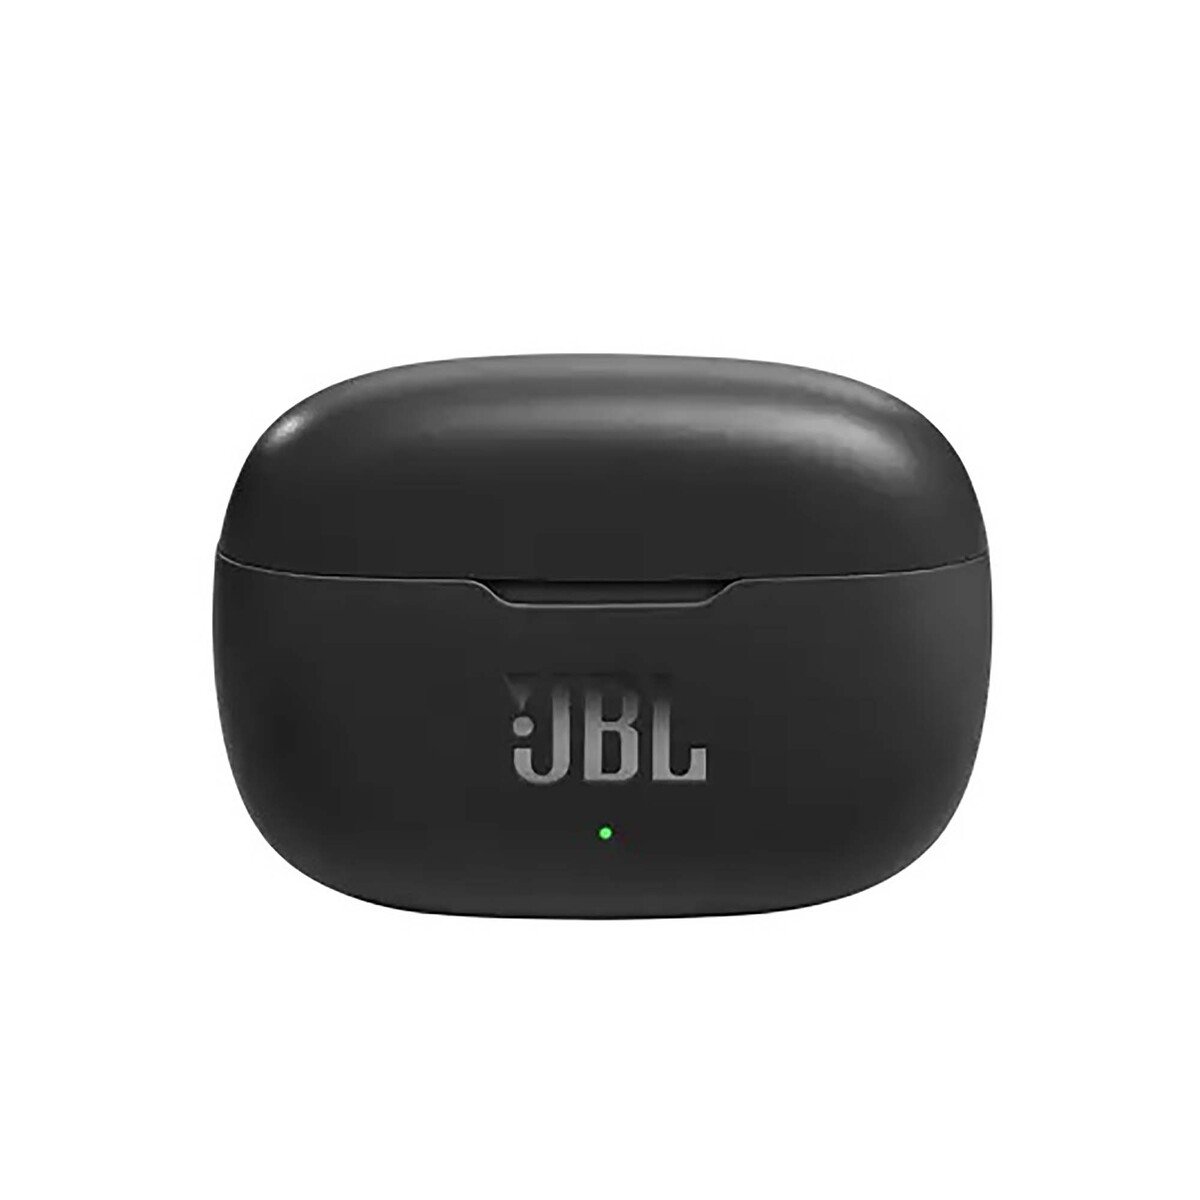 JBL True Wireless Earbuds JBLW200TWS Black